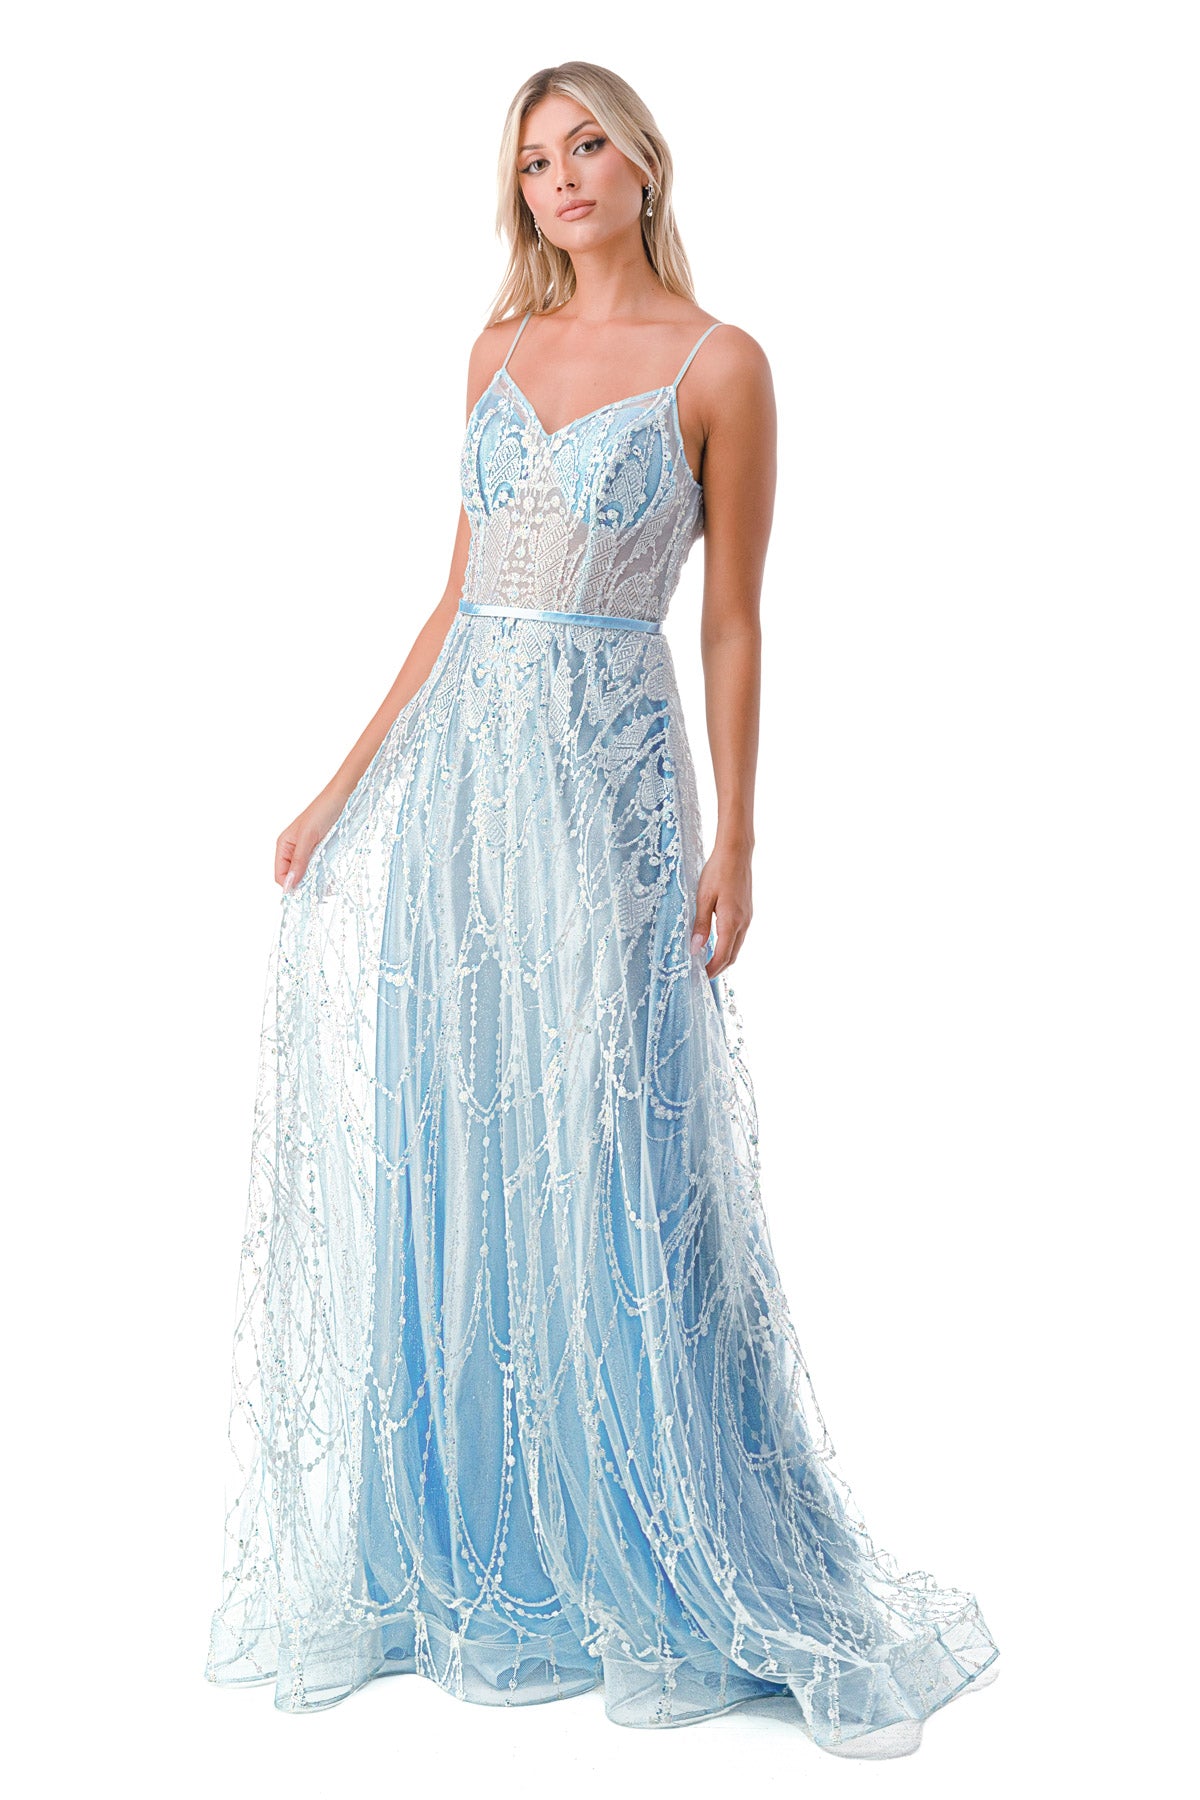 Aspeed Design -L2775B Sweetheart Embellished A Line Dress